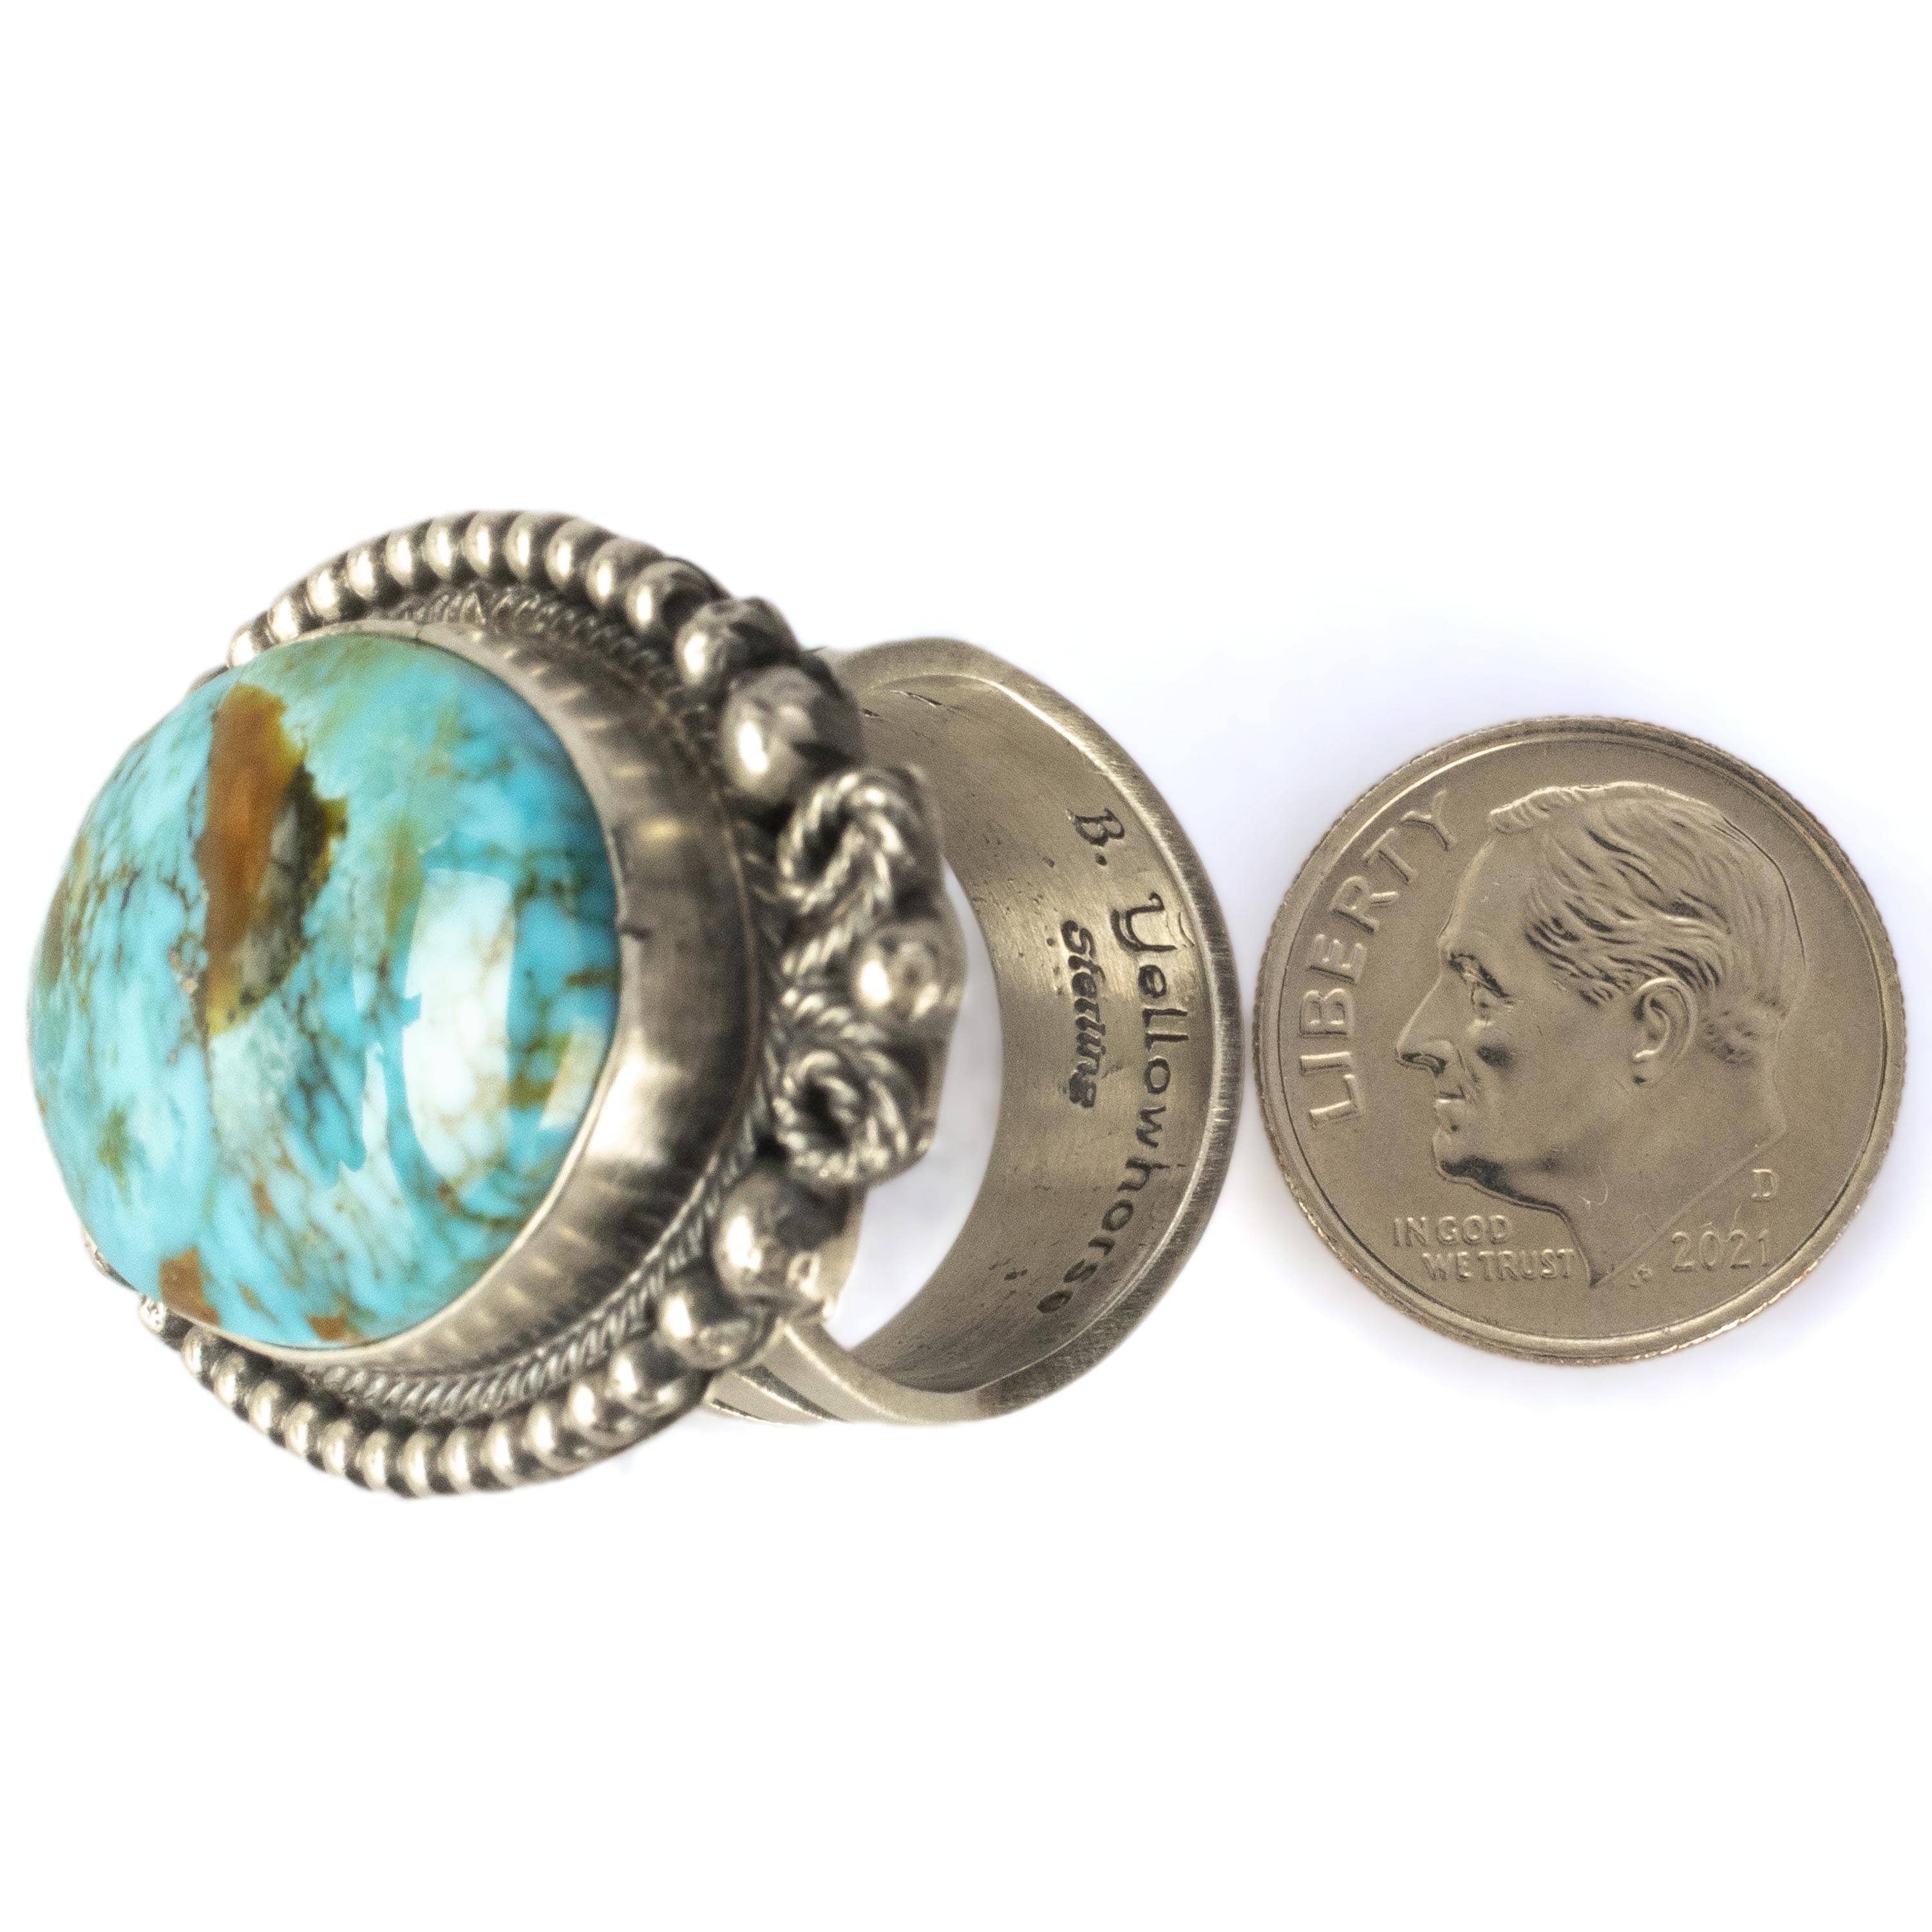 Kalifano Native American Jewelry 7.5 Brian Yellowhorse Navajo Kingman Turquoise USA Native American Made 925 Sterling Silver Ring NAR1800.008.75